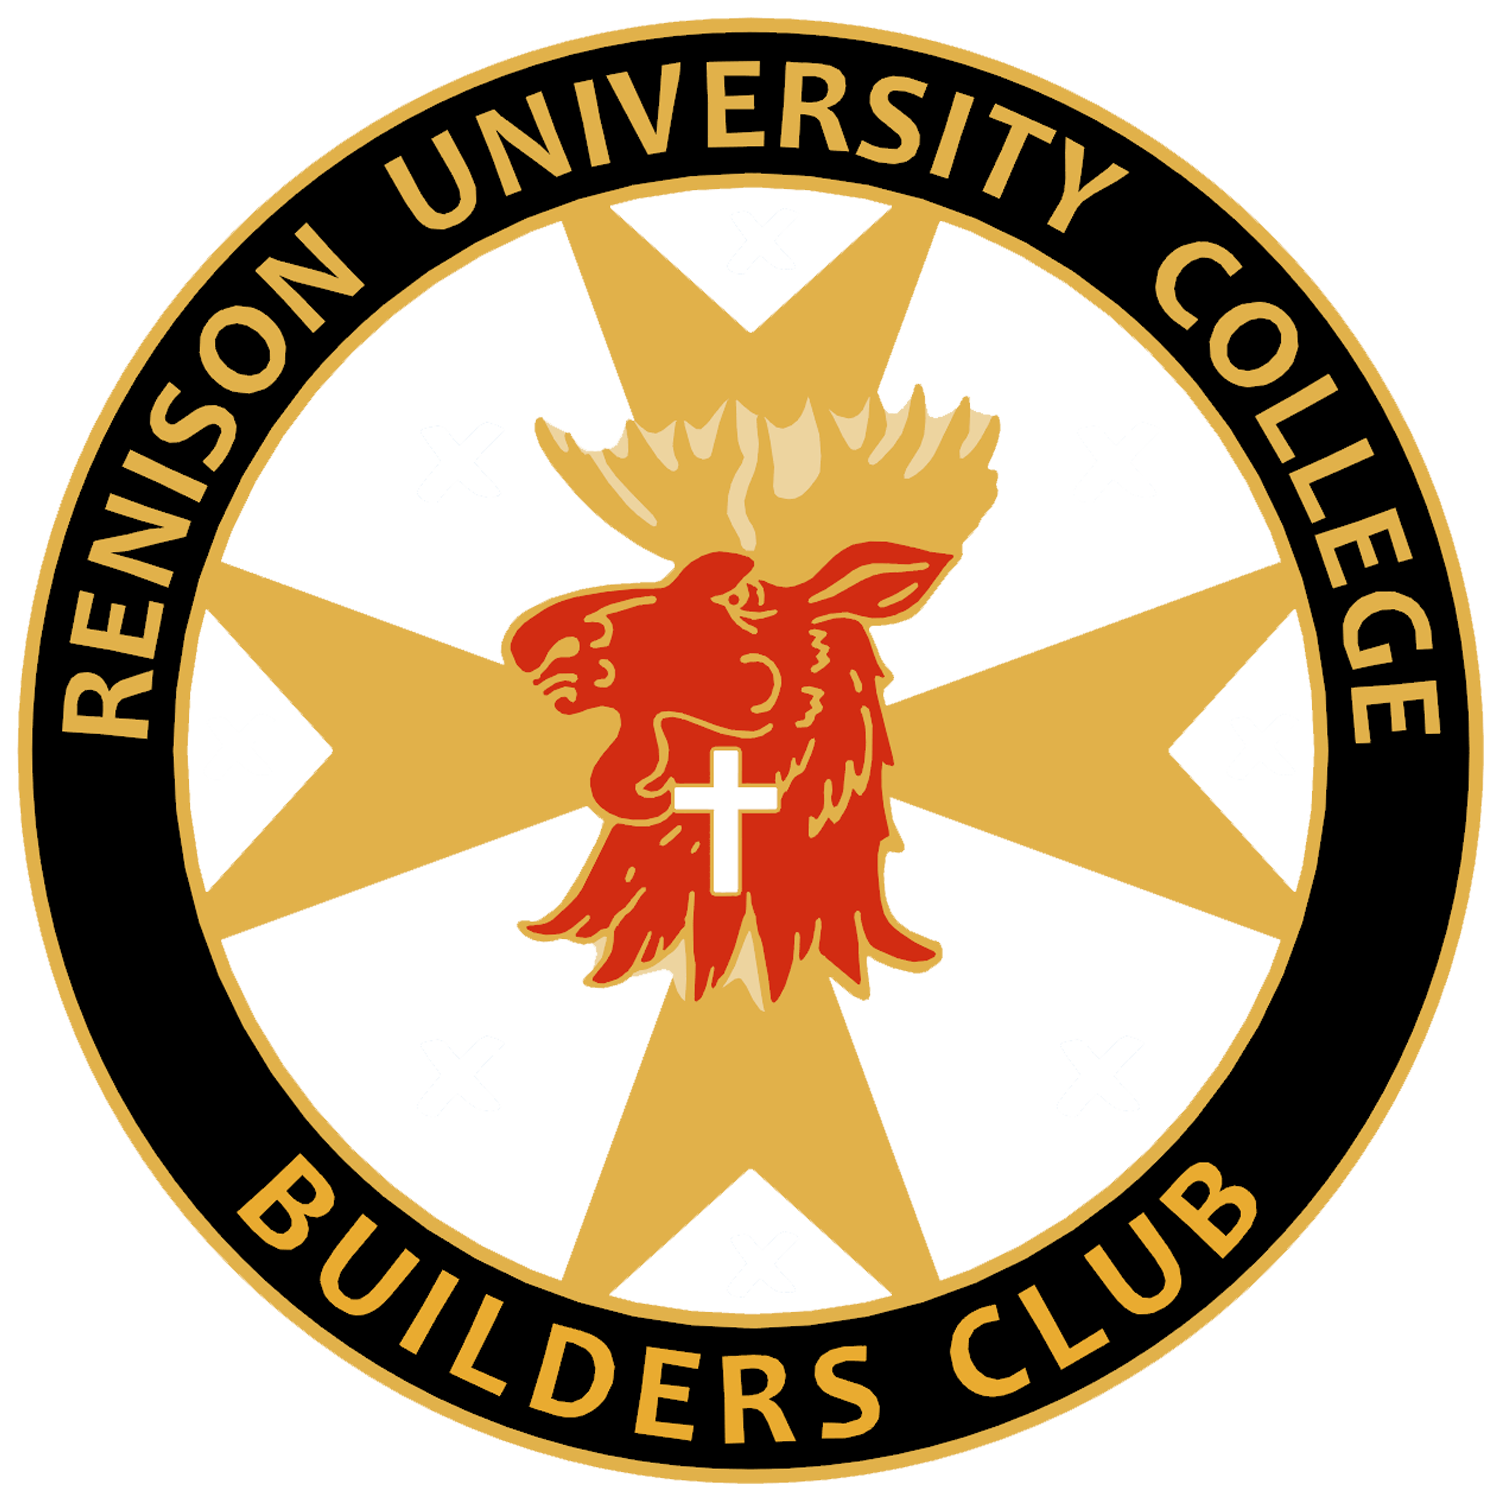 Renison Builders Club badge